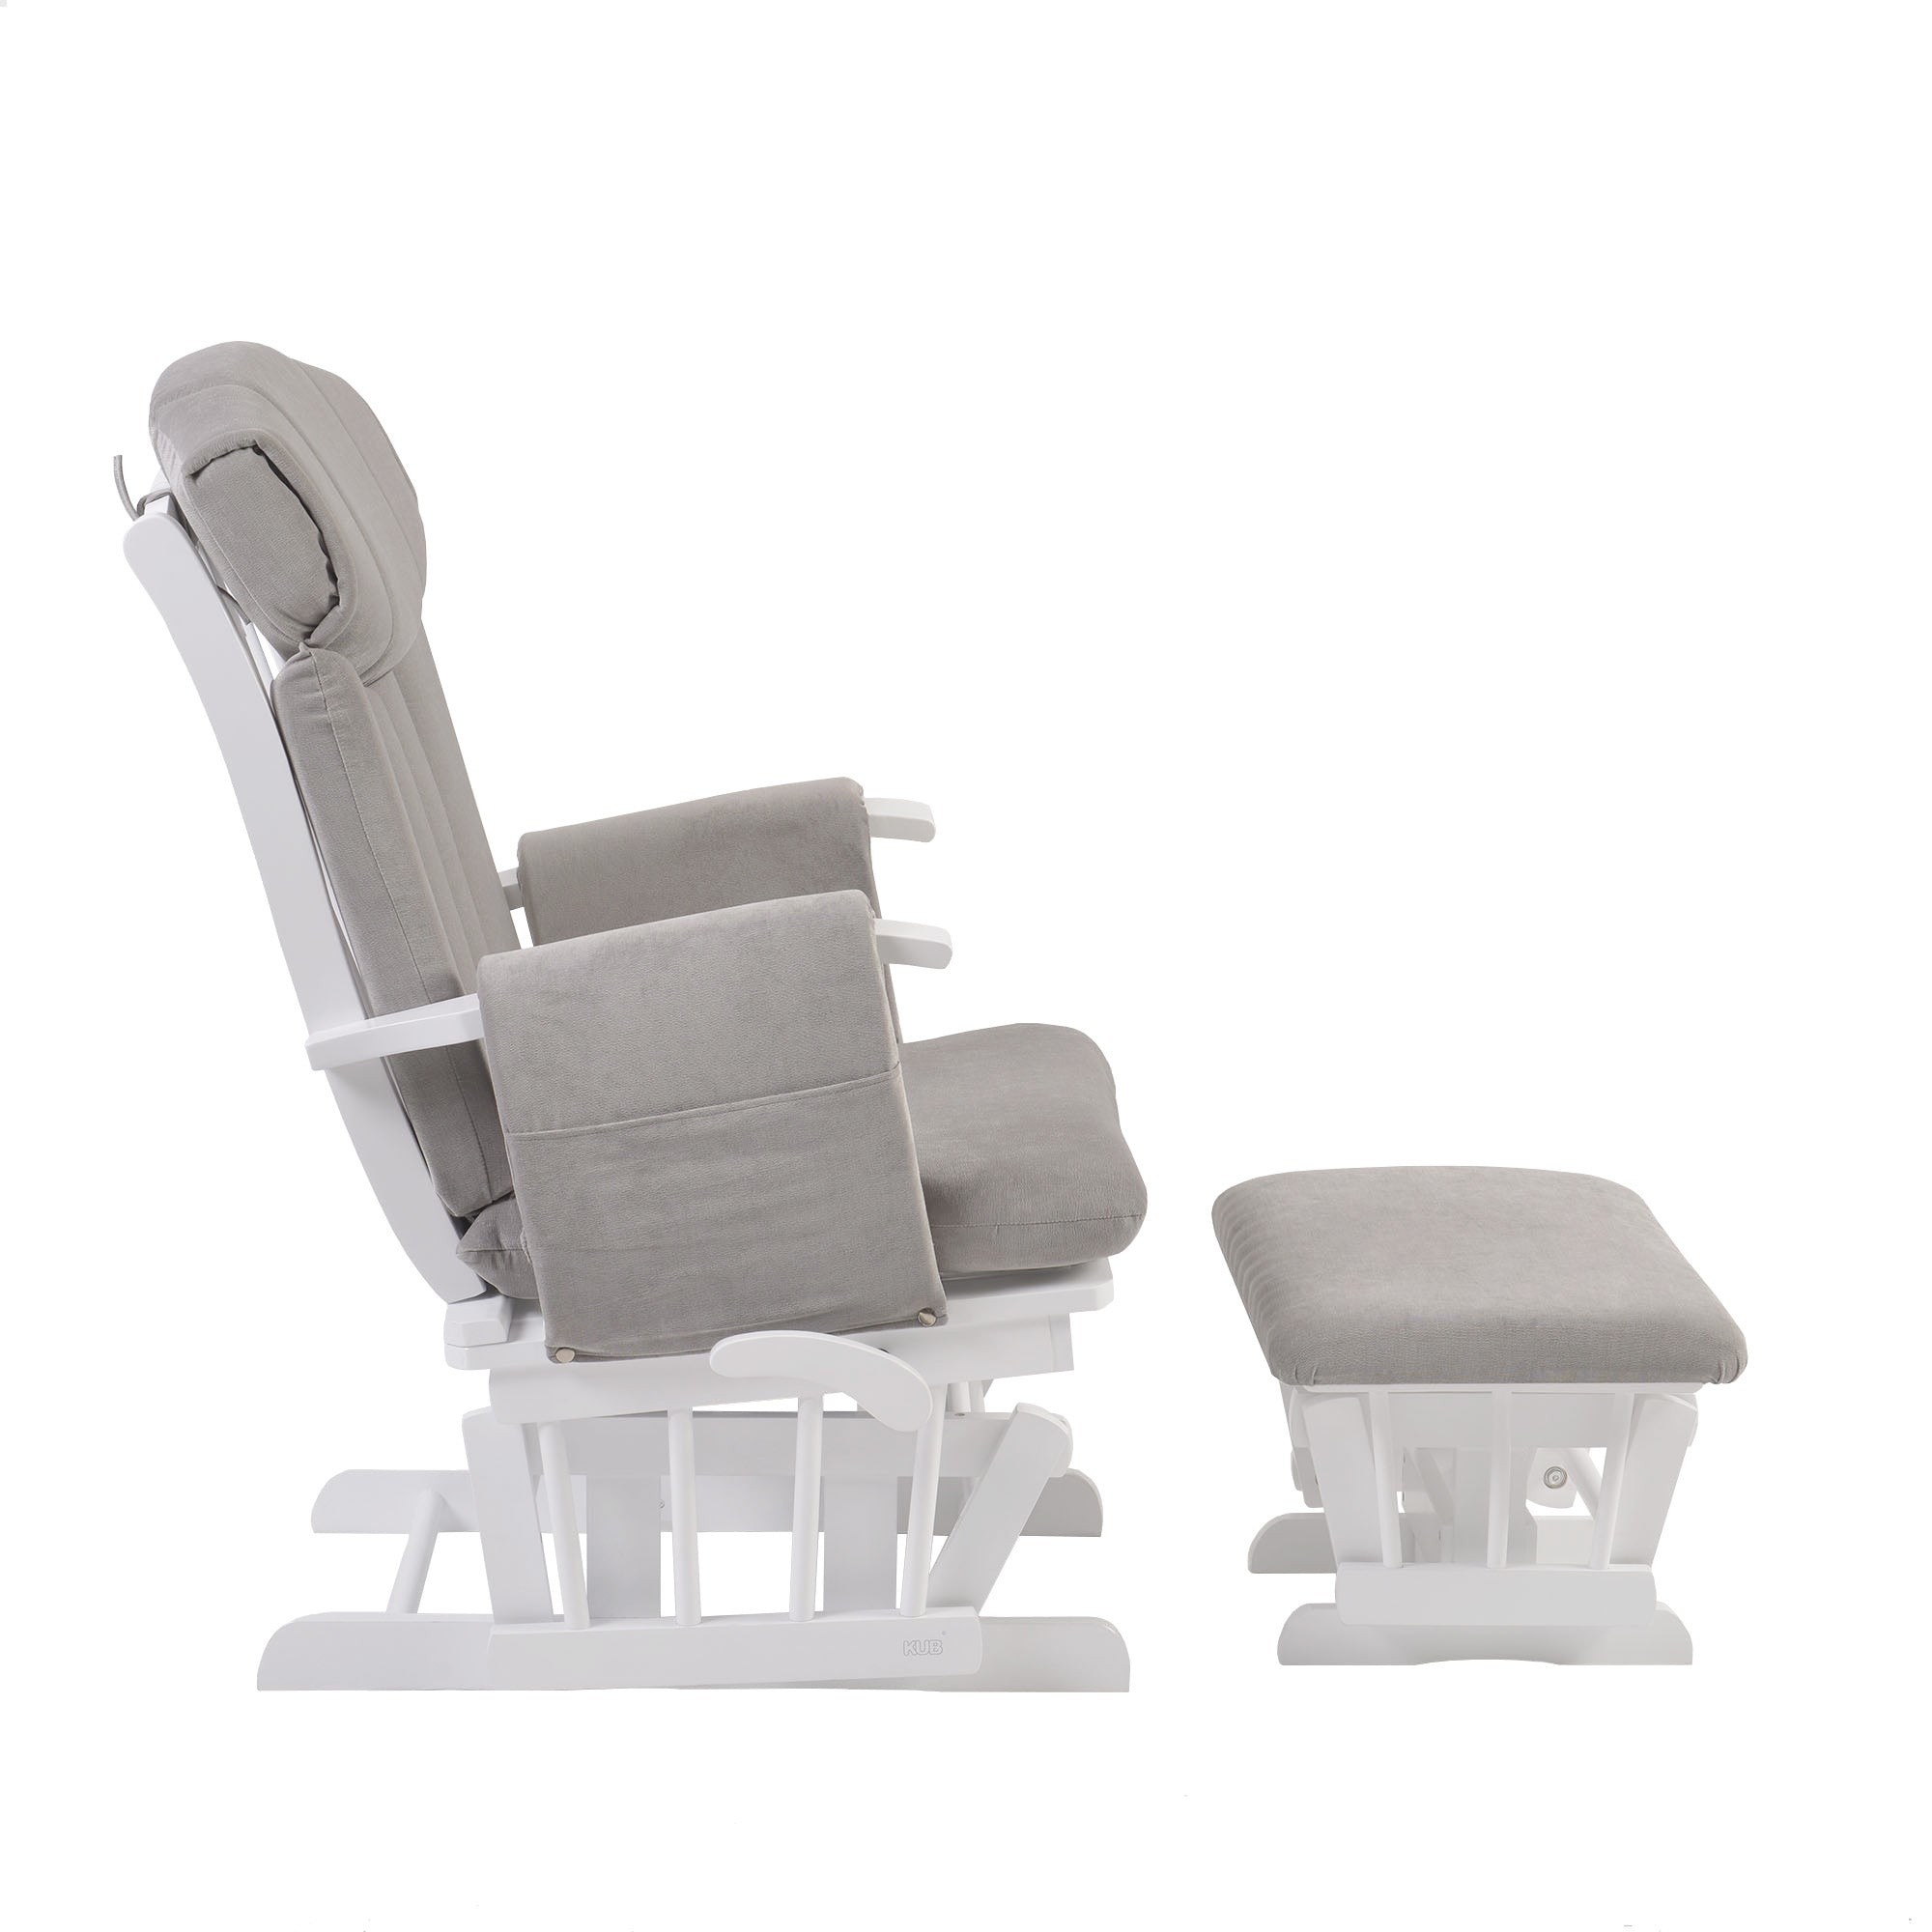 Chatsworth Nursing Chair and Footstool Grey